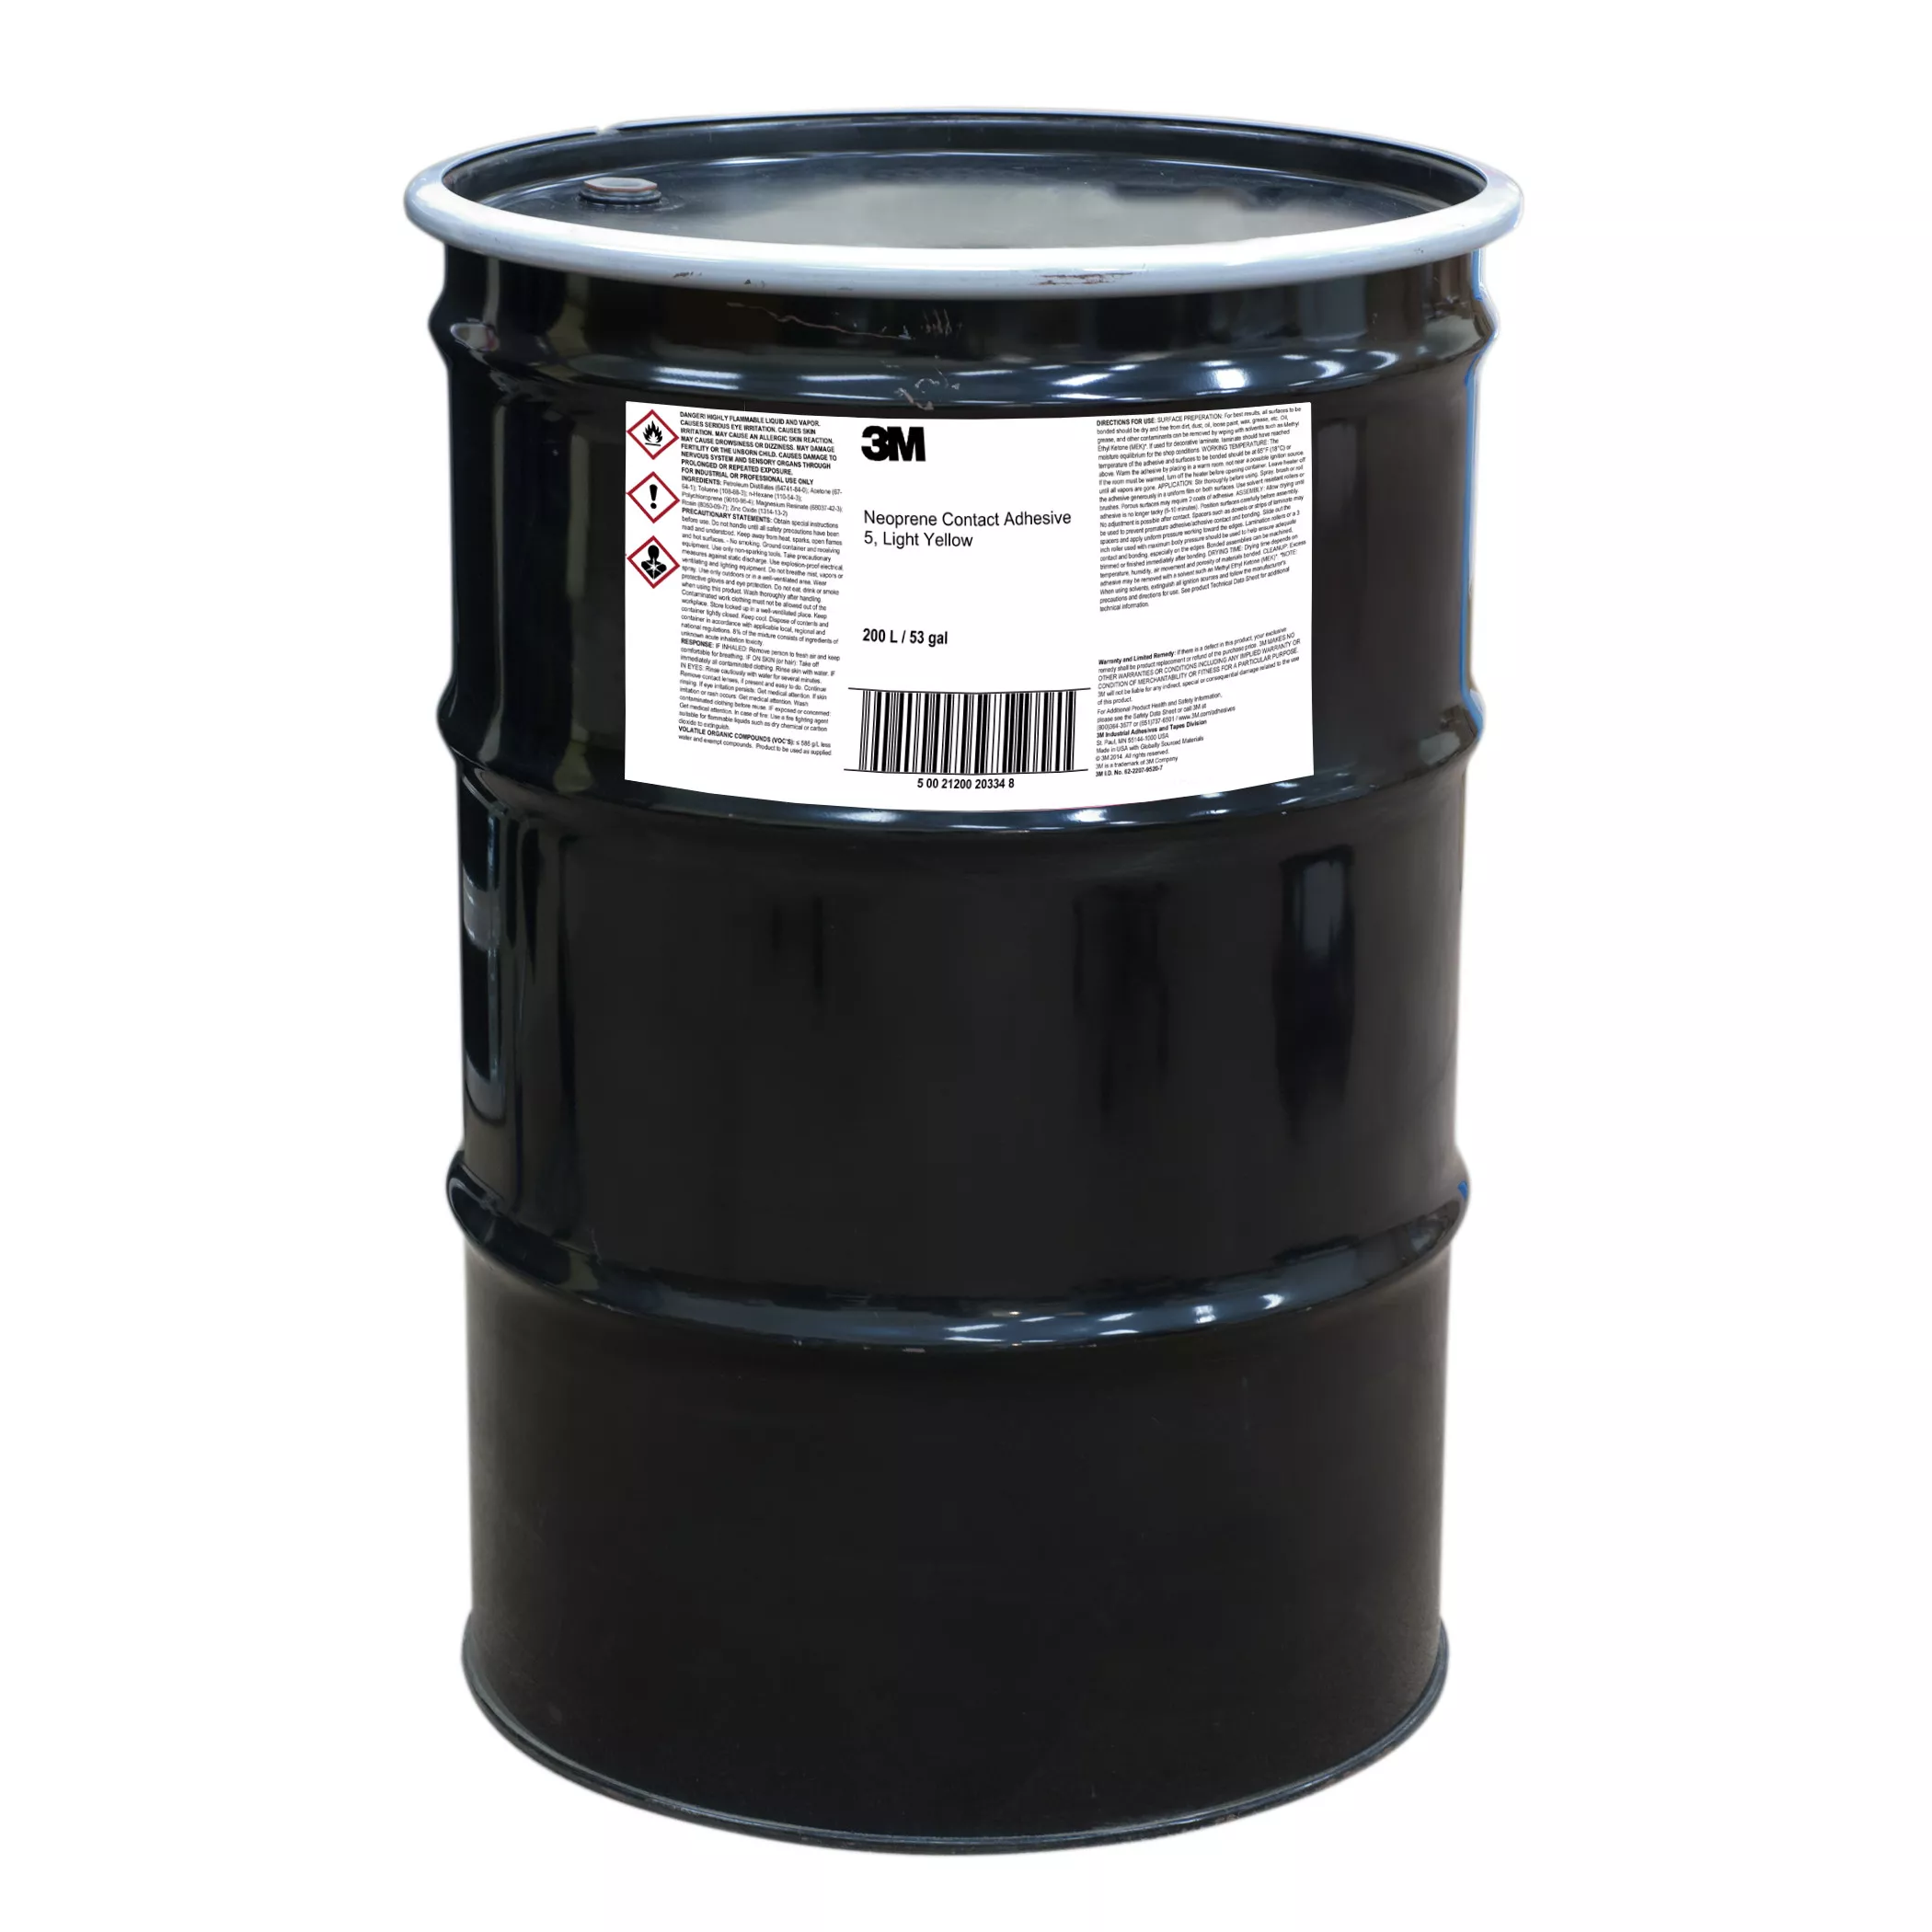 3M™ Neoprene Contact Adhesive 5, Light Yellow, 55 Gallon Agitator (53
Gallon Net), Drum